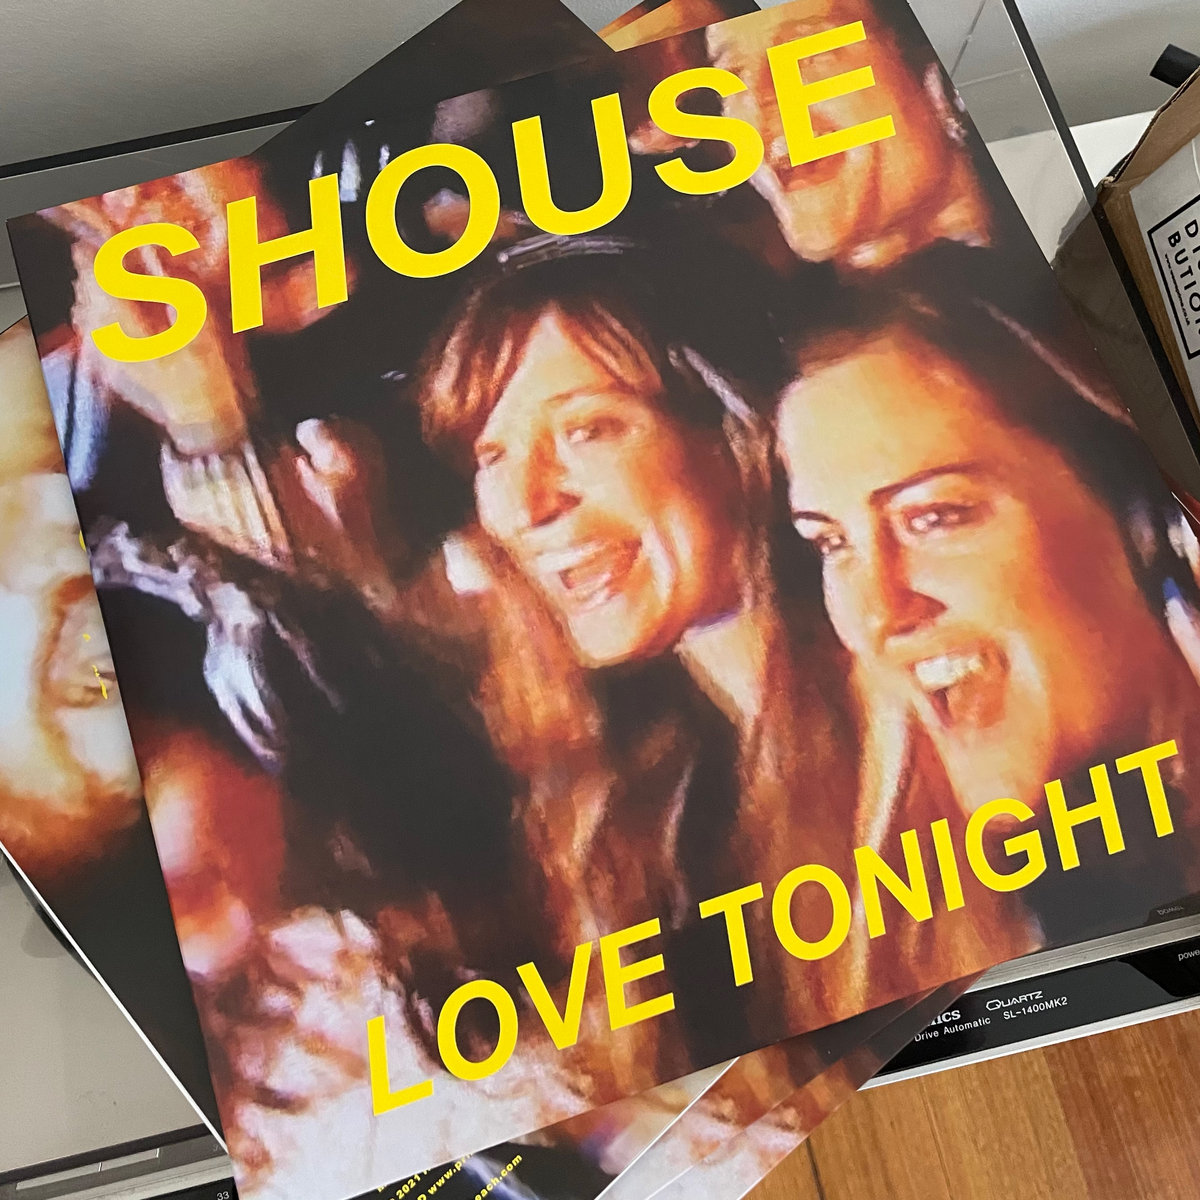 Shouse love remix. Love Tonight. Shouse Love Tonight. Shouse Love Tonight обложка. Shouse группа.